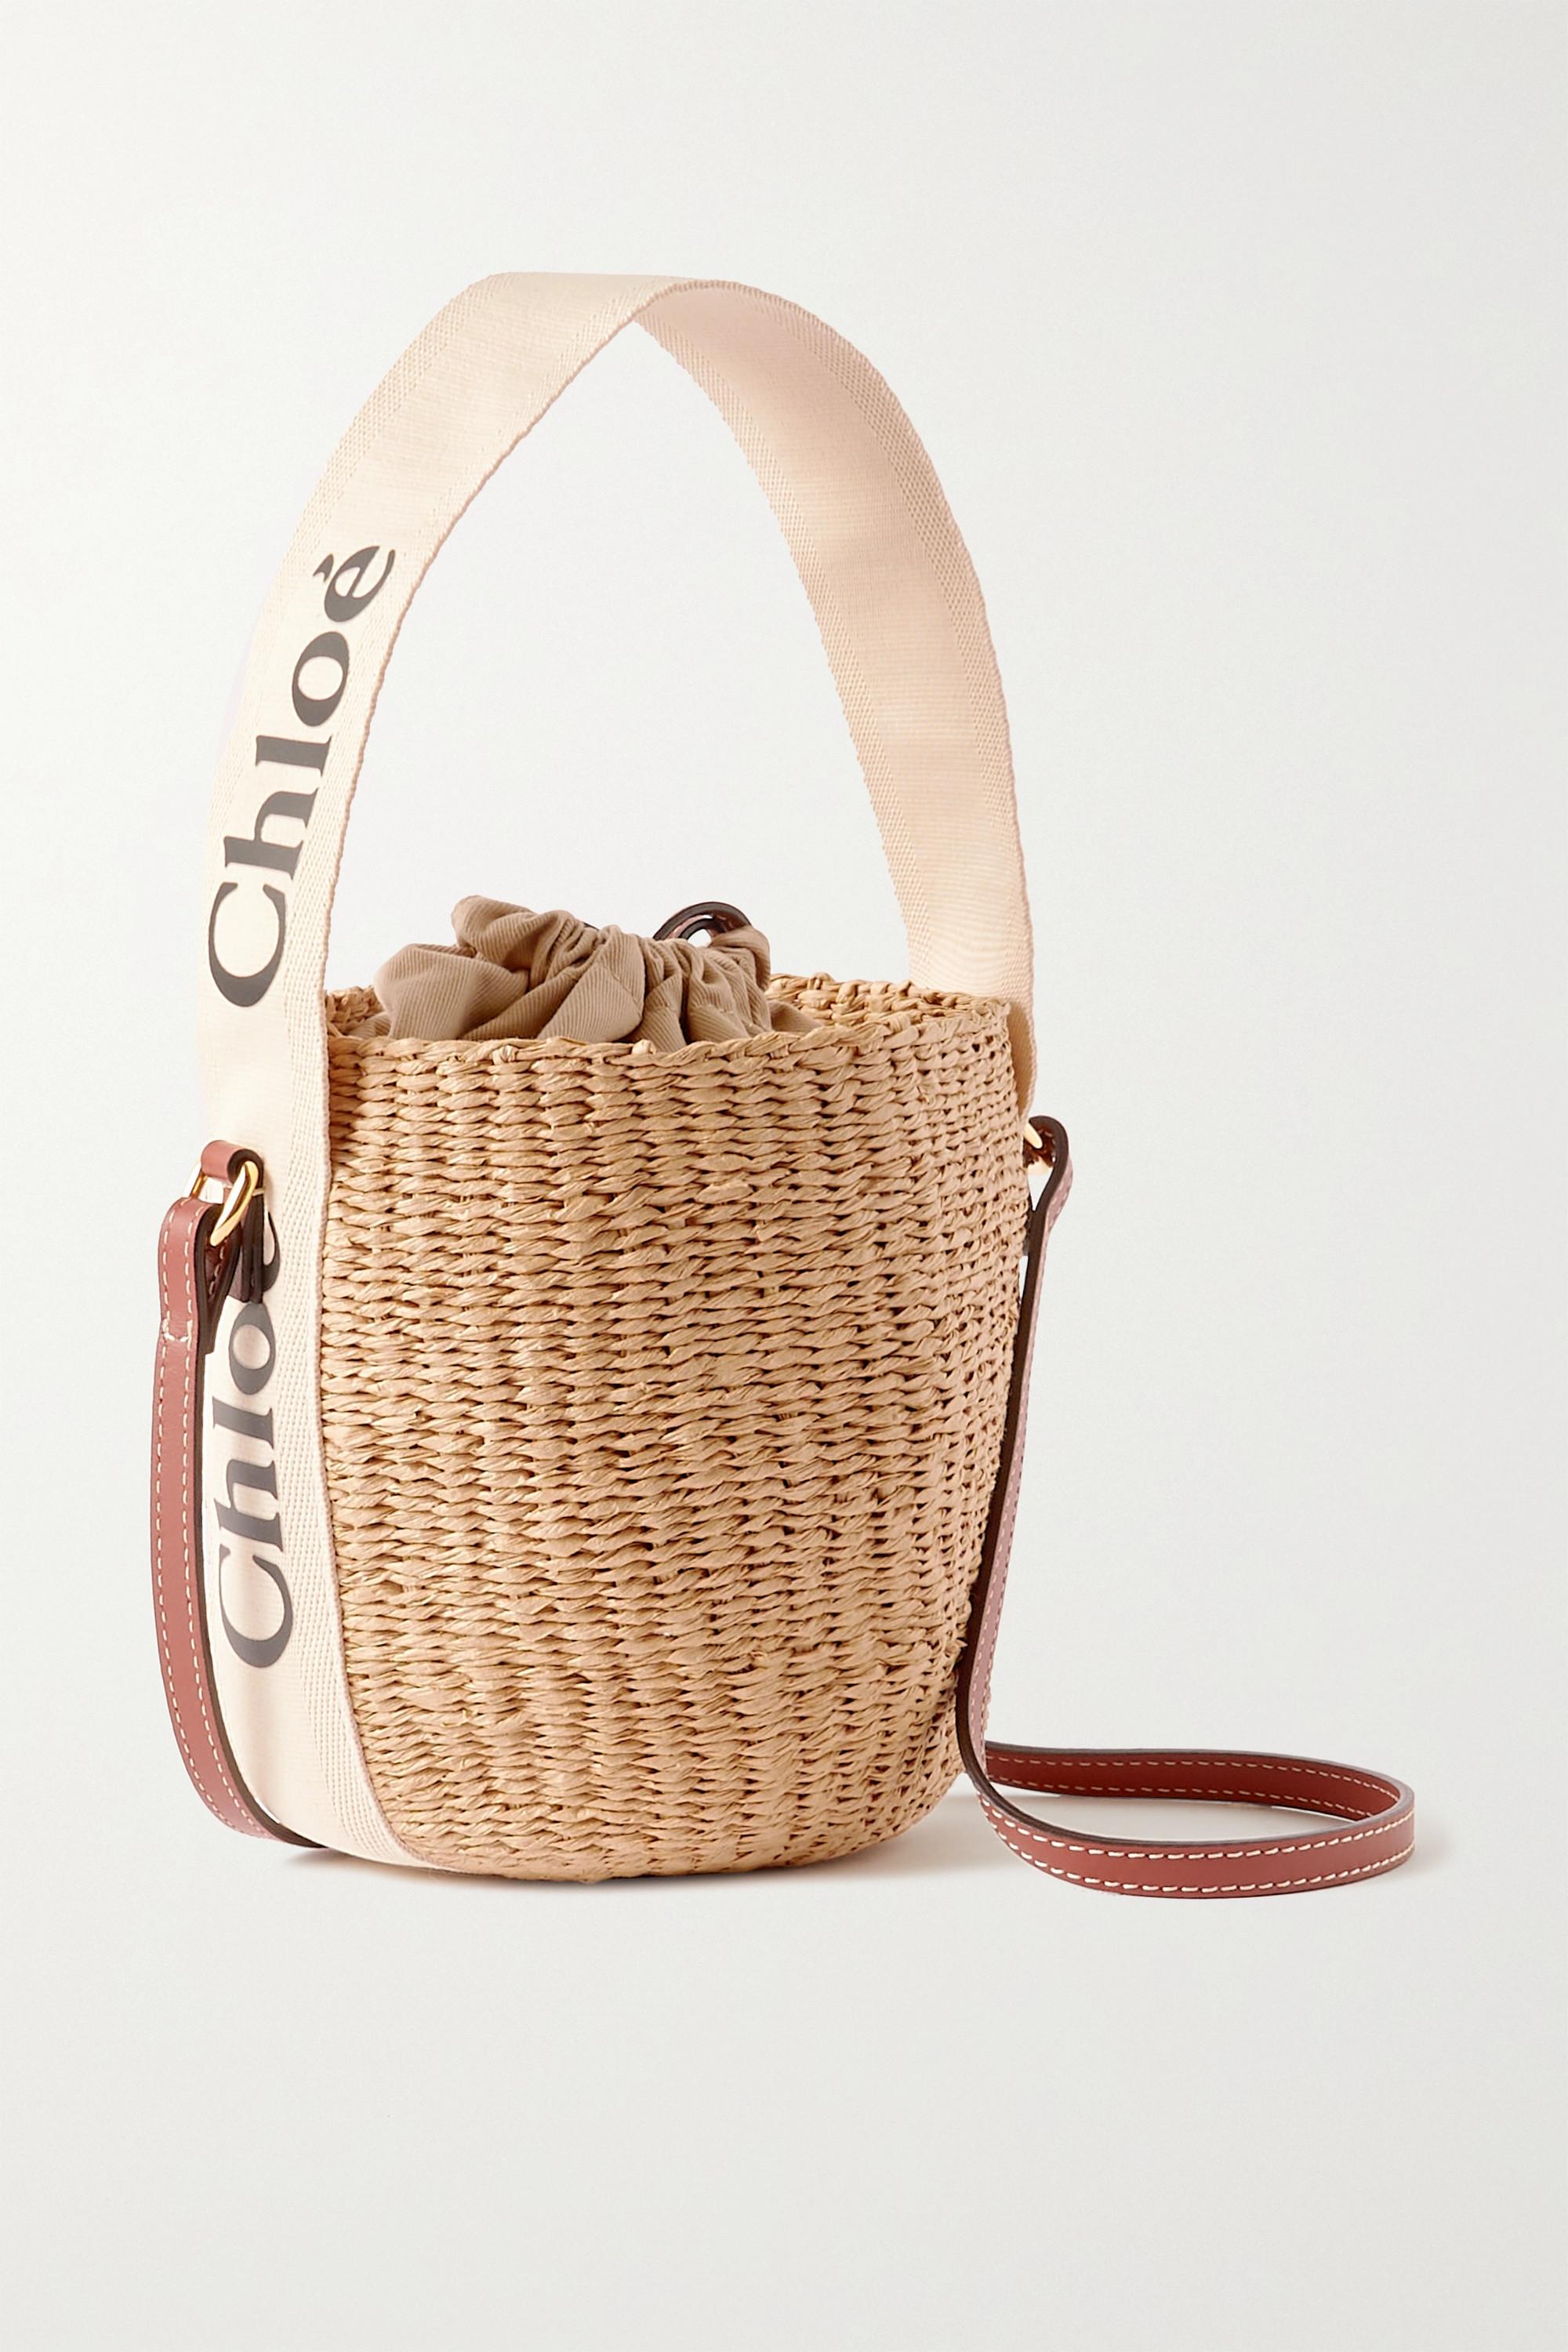 Chloé Woody Small Leather-trimmed Raffia Basket Bag in White | Lyst  Australia